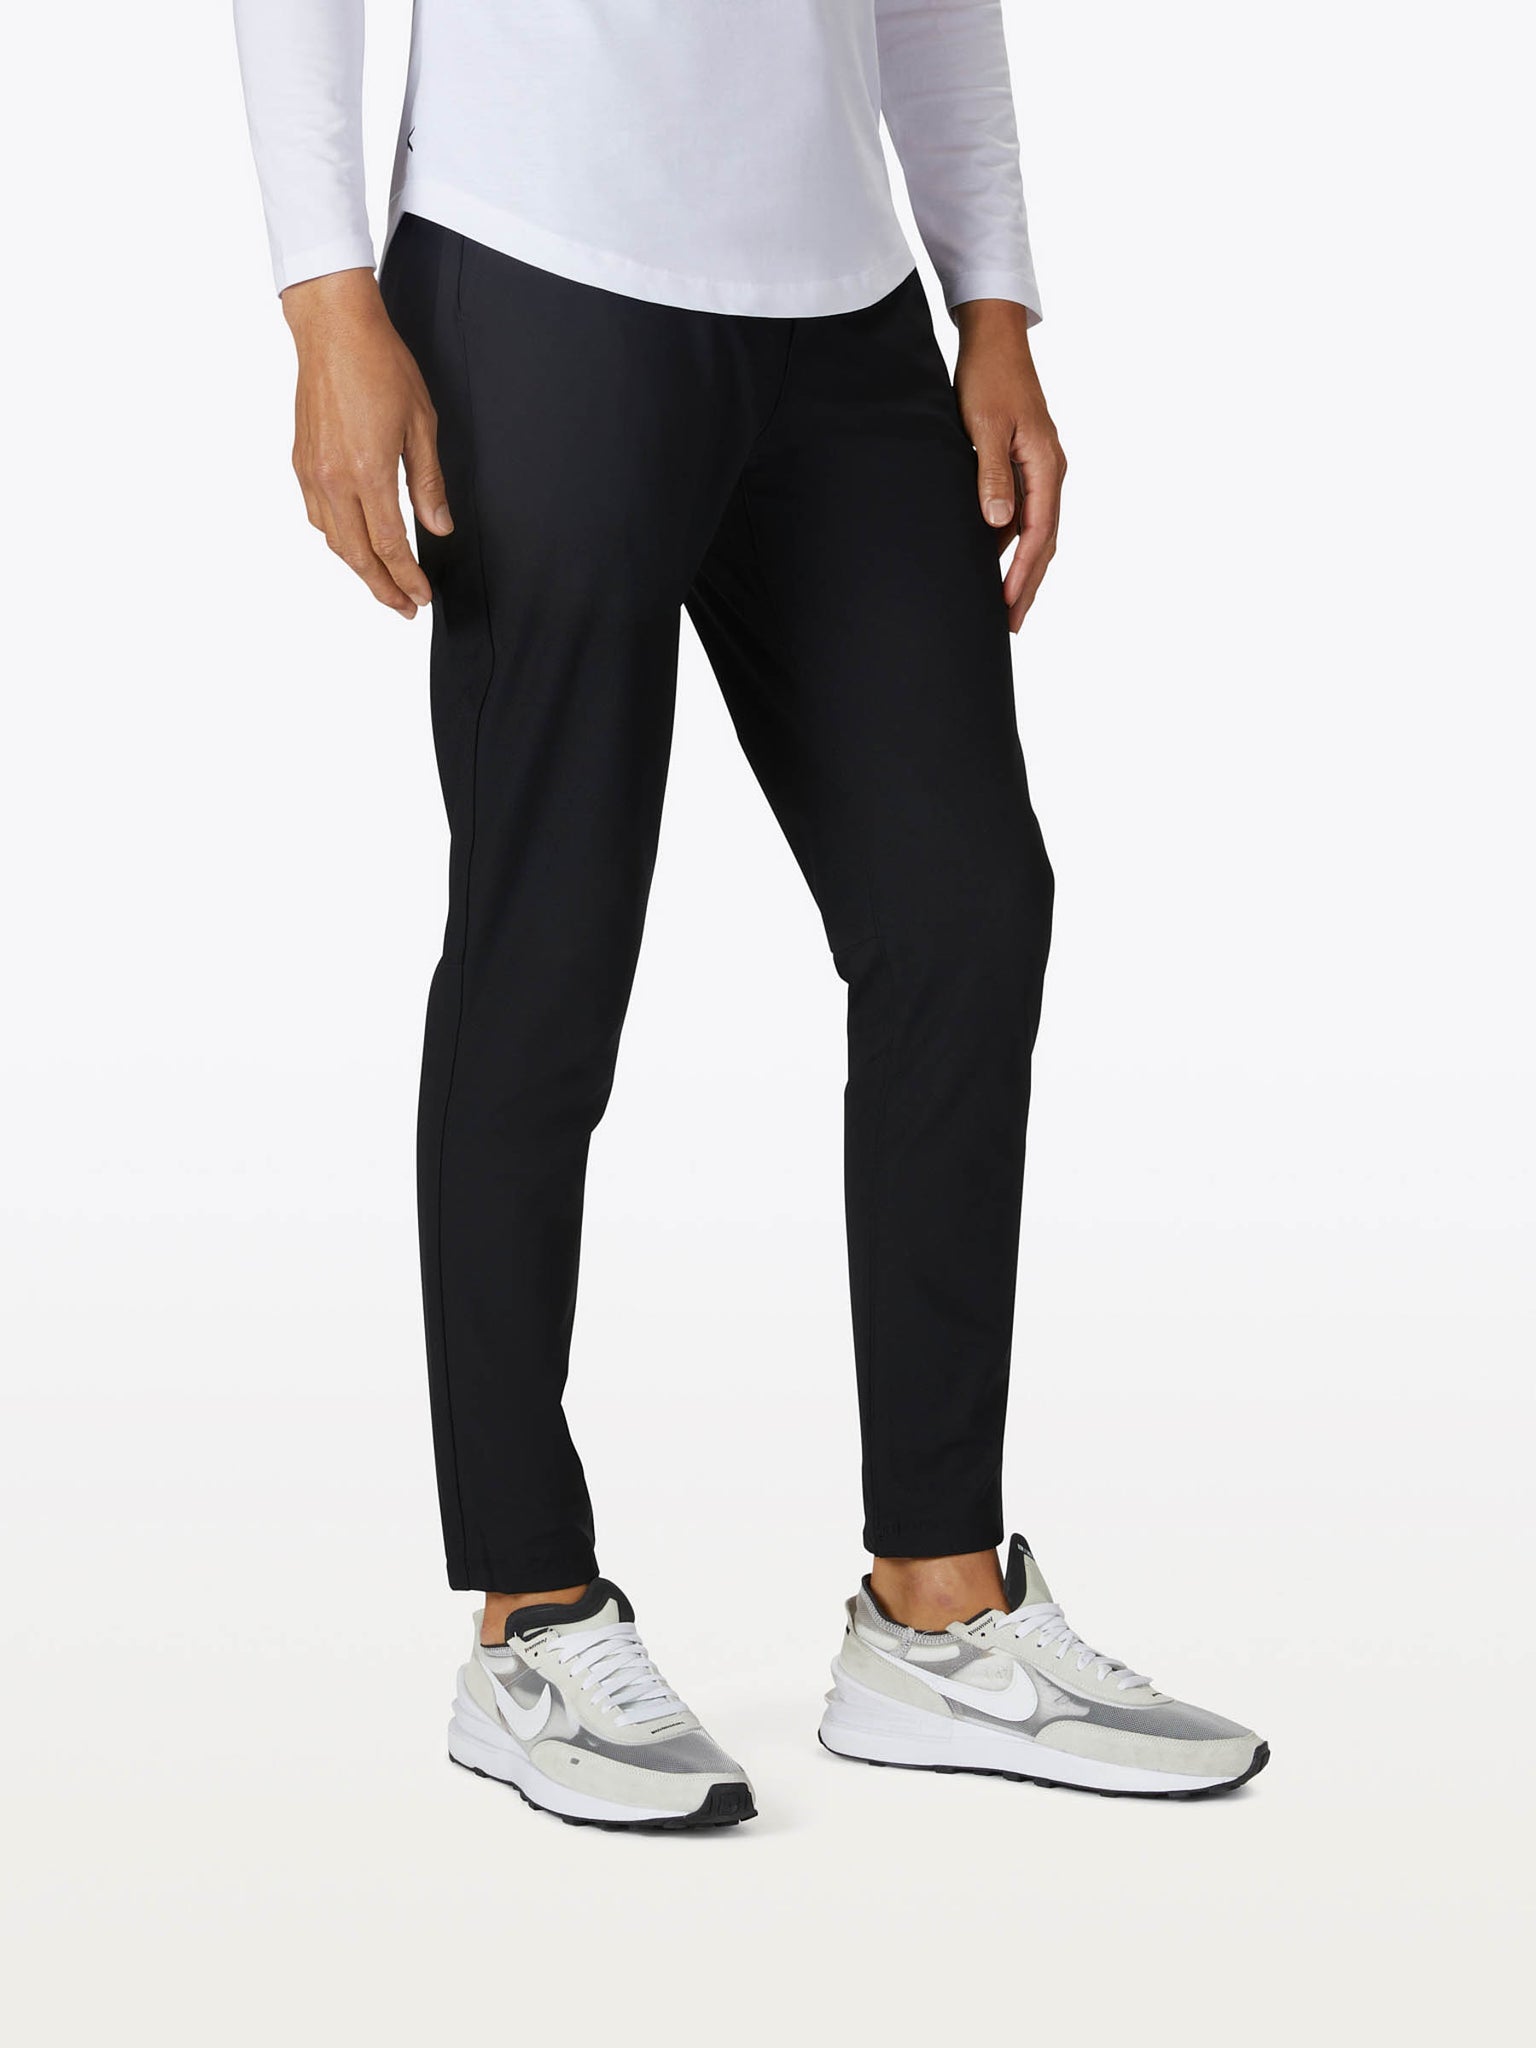 Nike Dri-FIT Flex Men's Yoga Pants Tapered Joggers Black Sz XL